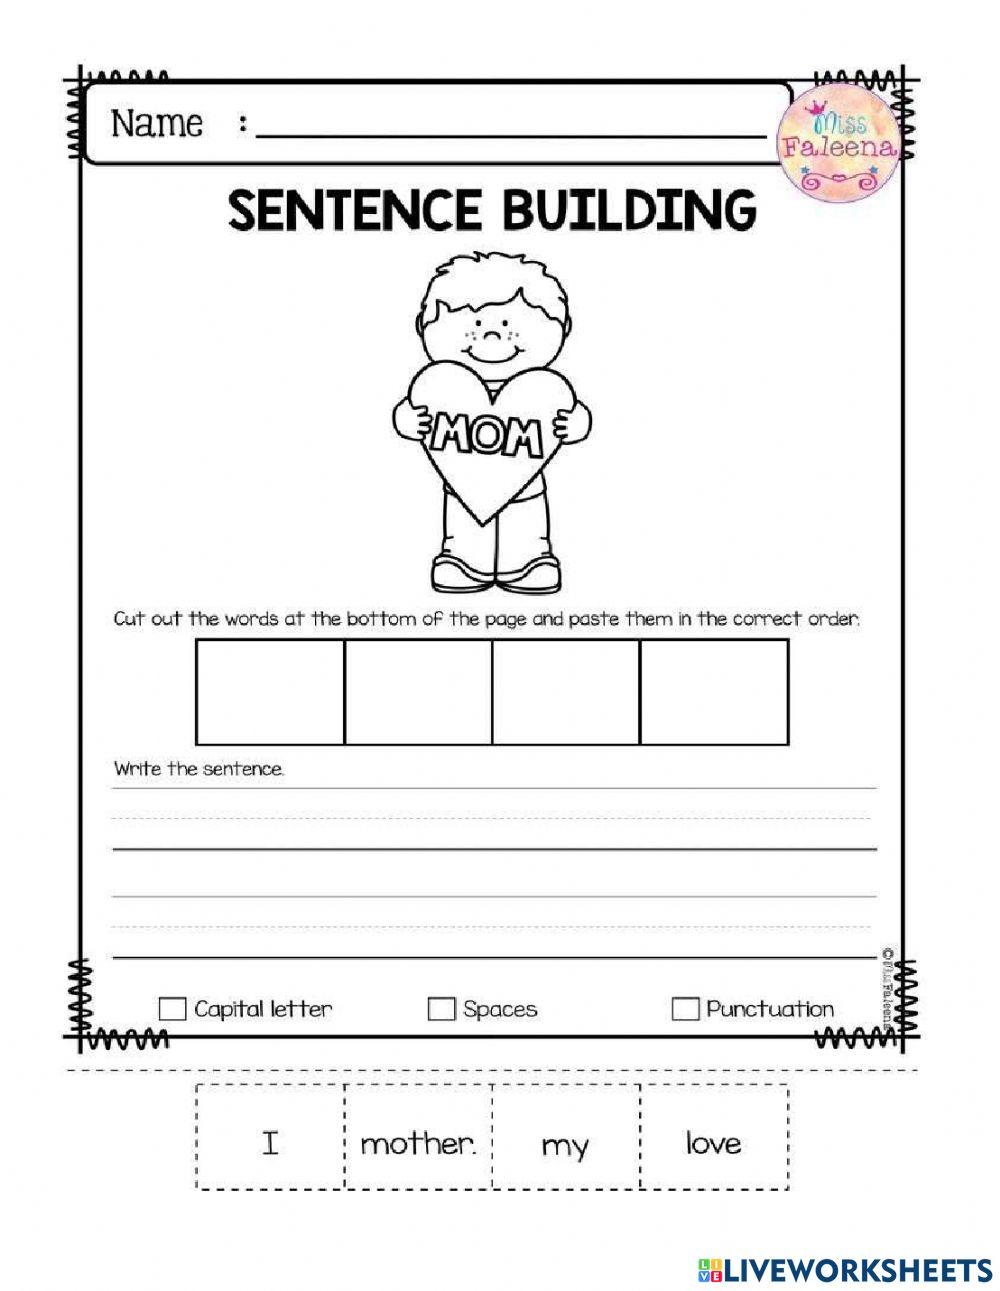 Sentence building